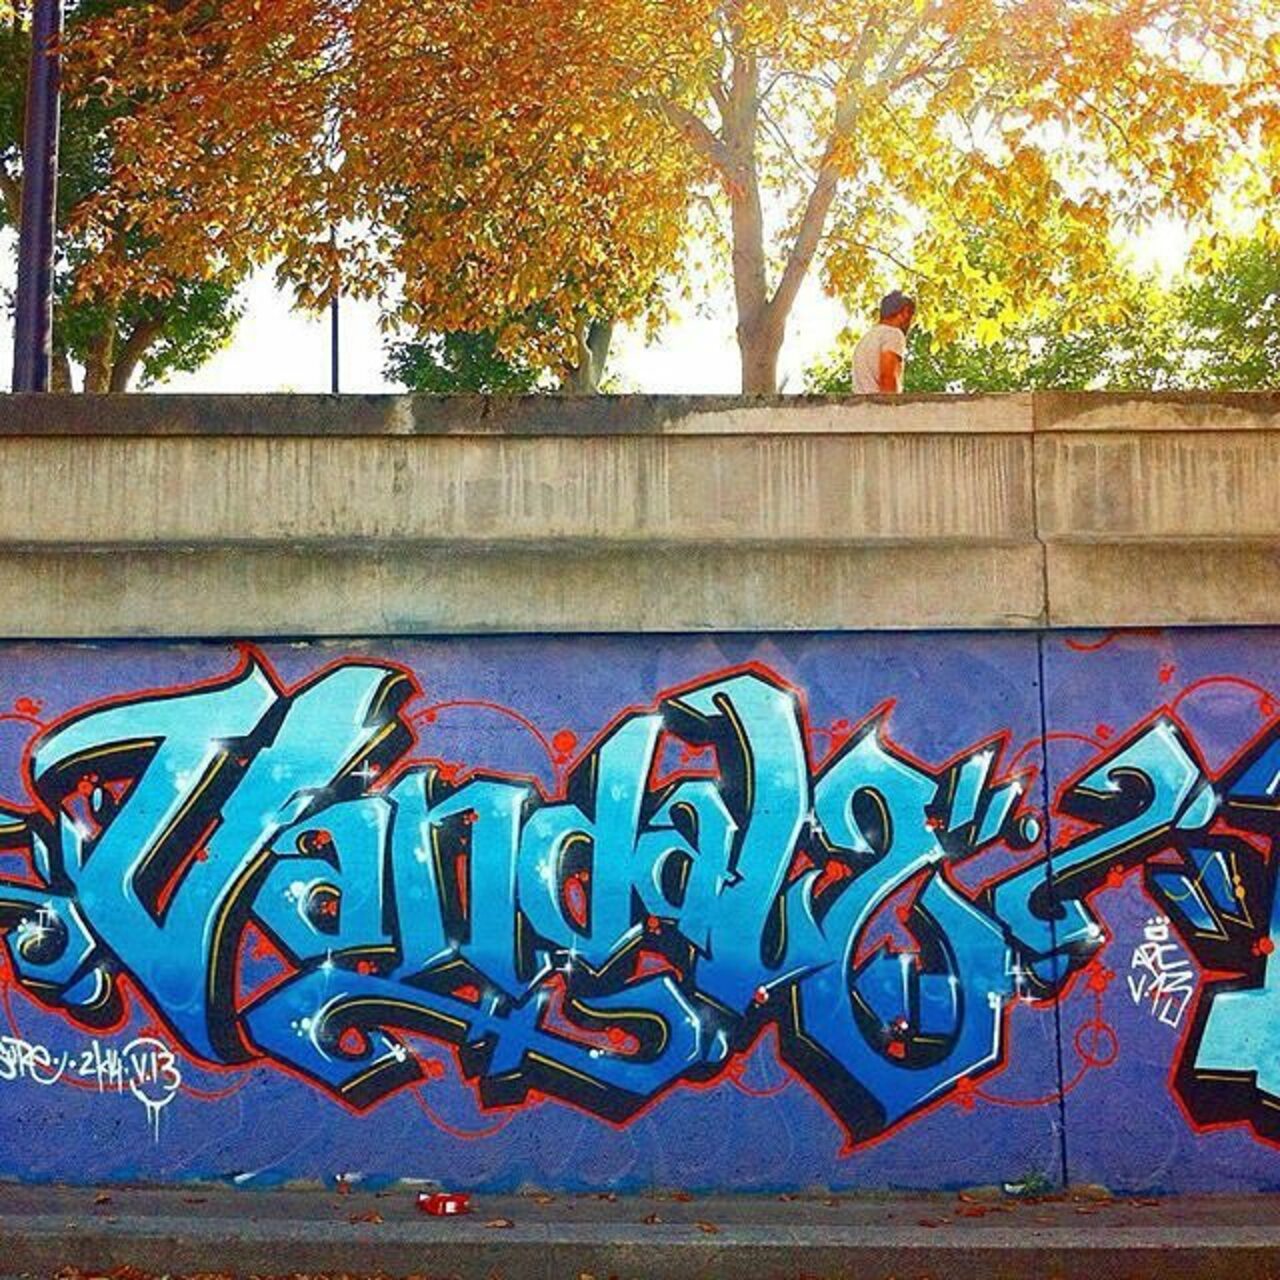 RT @StArtEverywhere: #streetart #streetarteverywhere #streetshot #graffitiart #graffiti #arturbain #urbanart  #mur #mural #wall #wallart… https://t.co/lWyTP07Lta